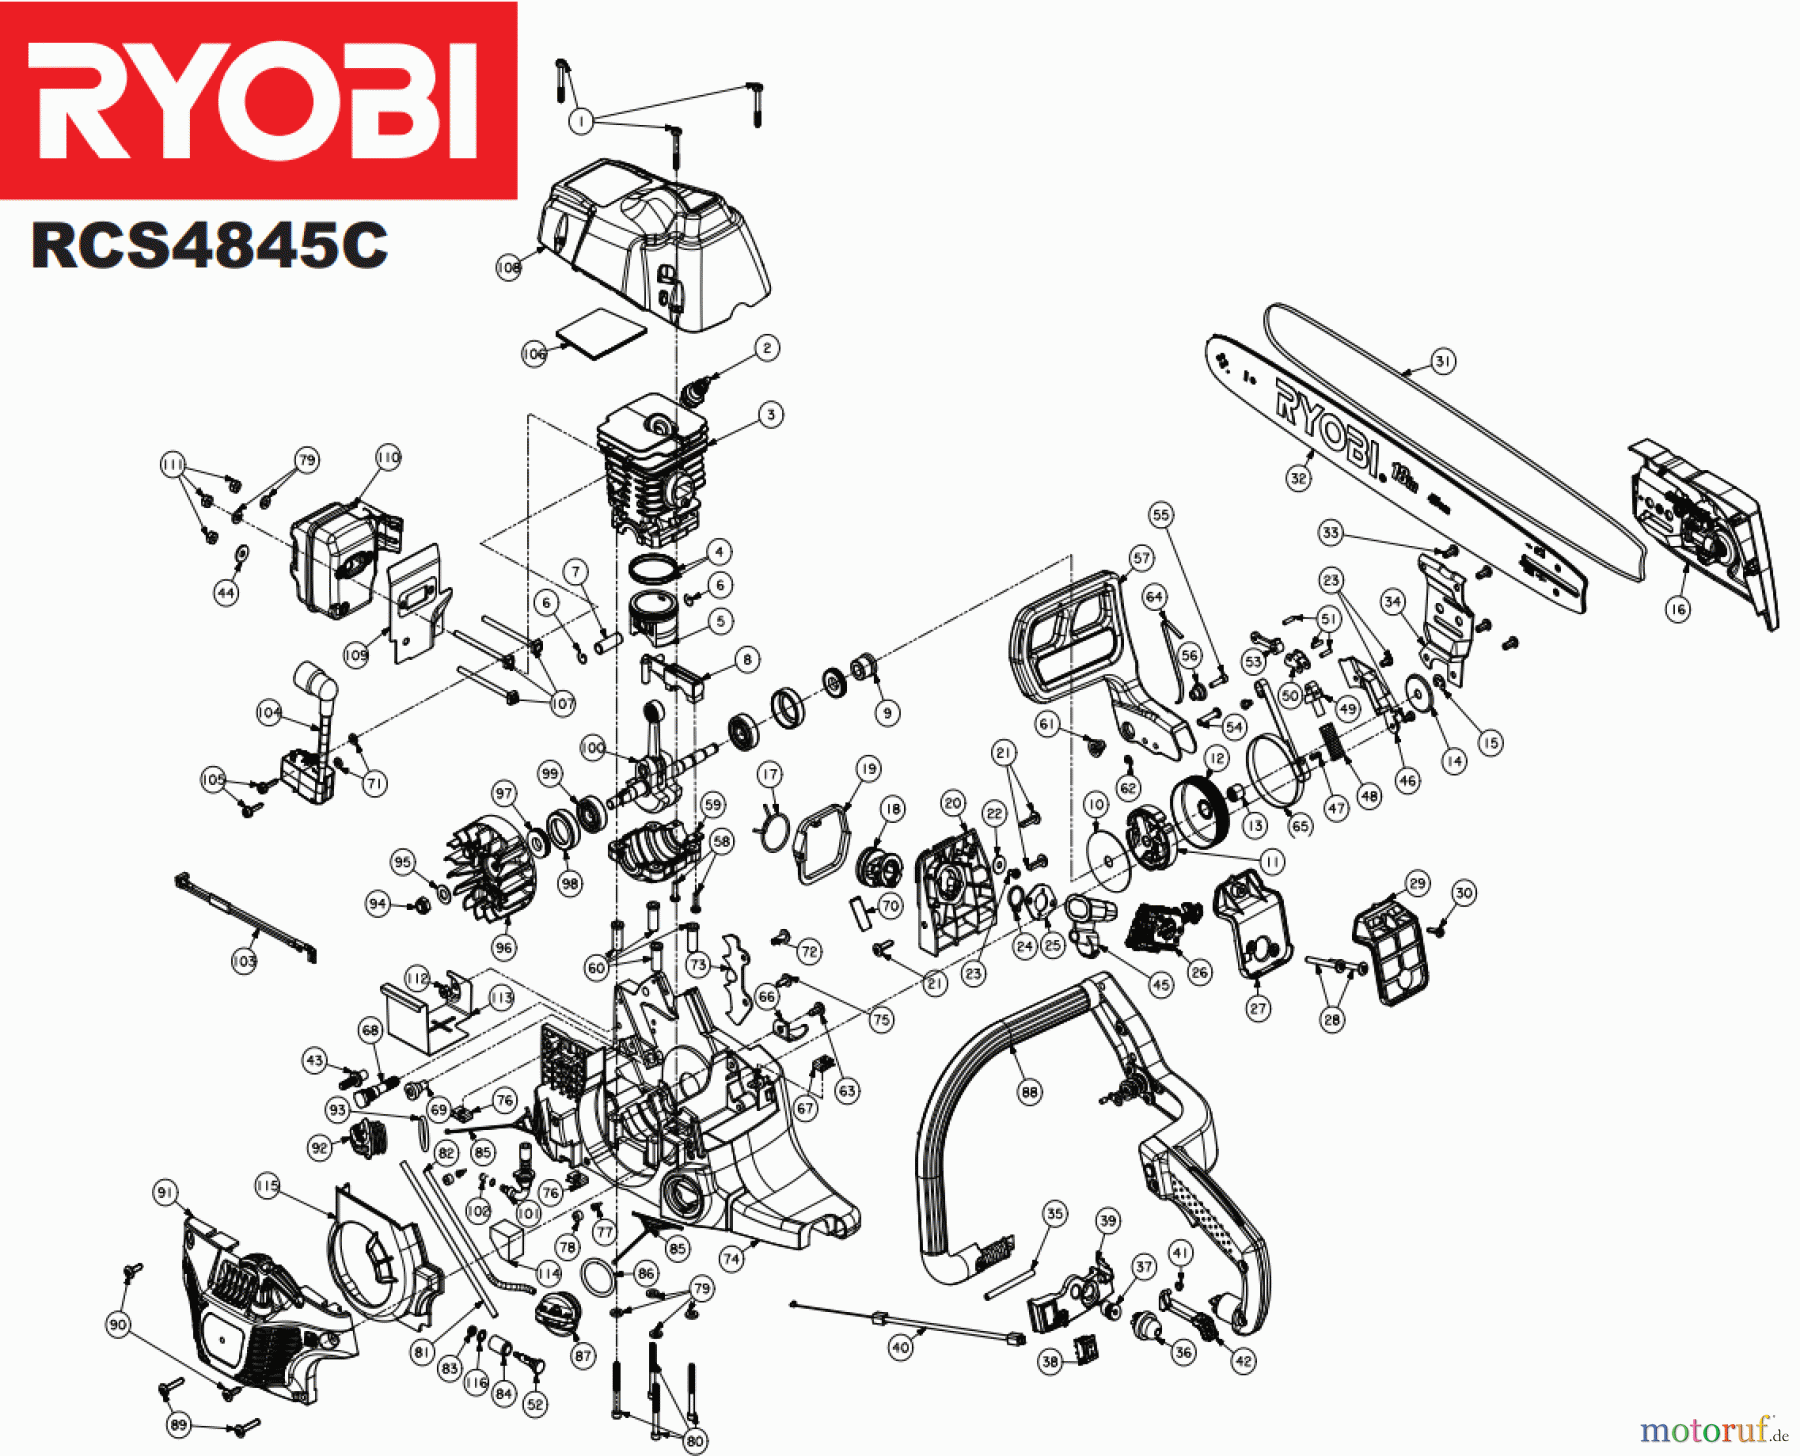  Ryobi Kettensägen Benzin RCS4845C Seite 1